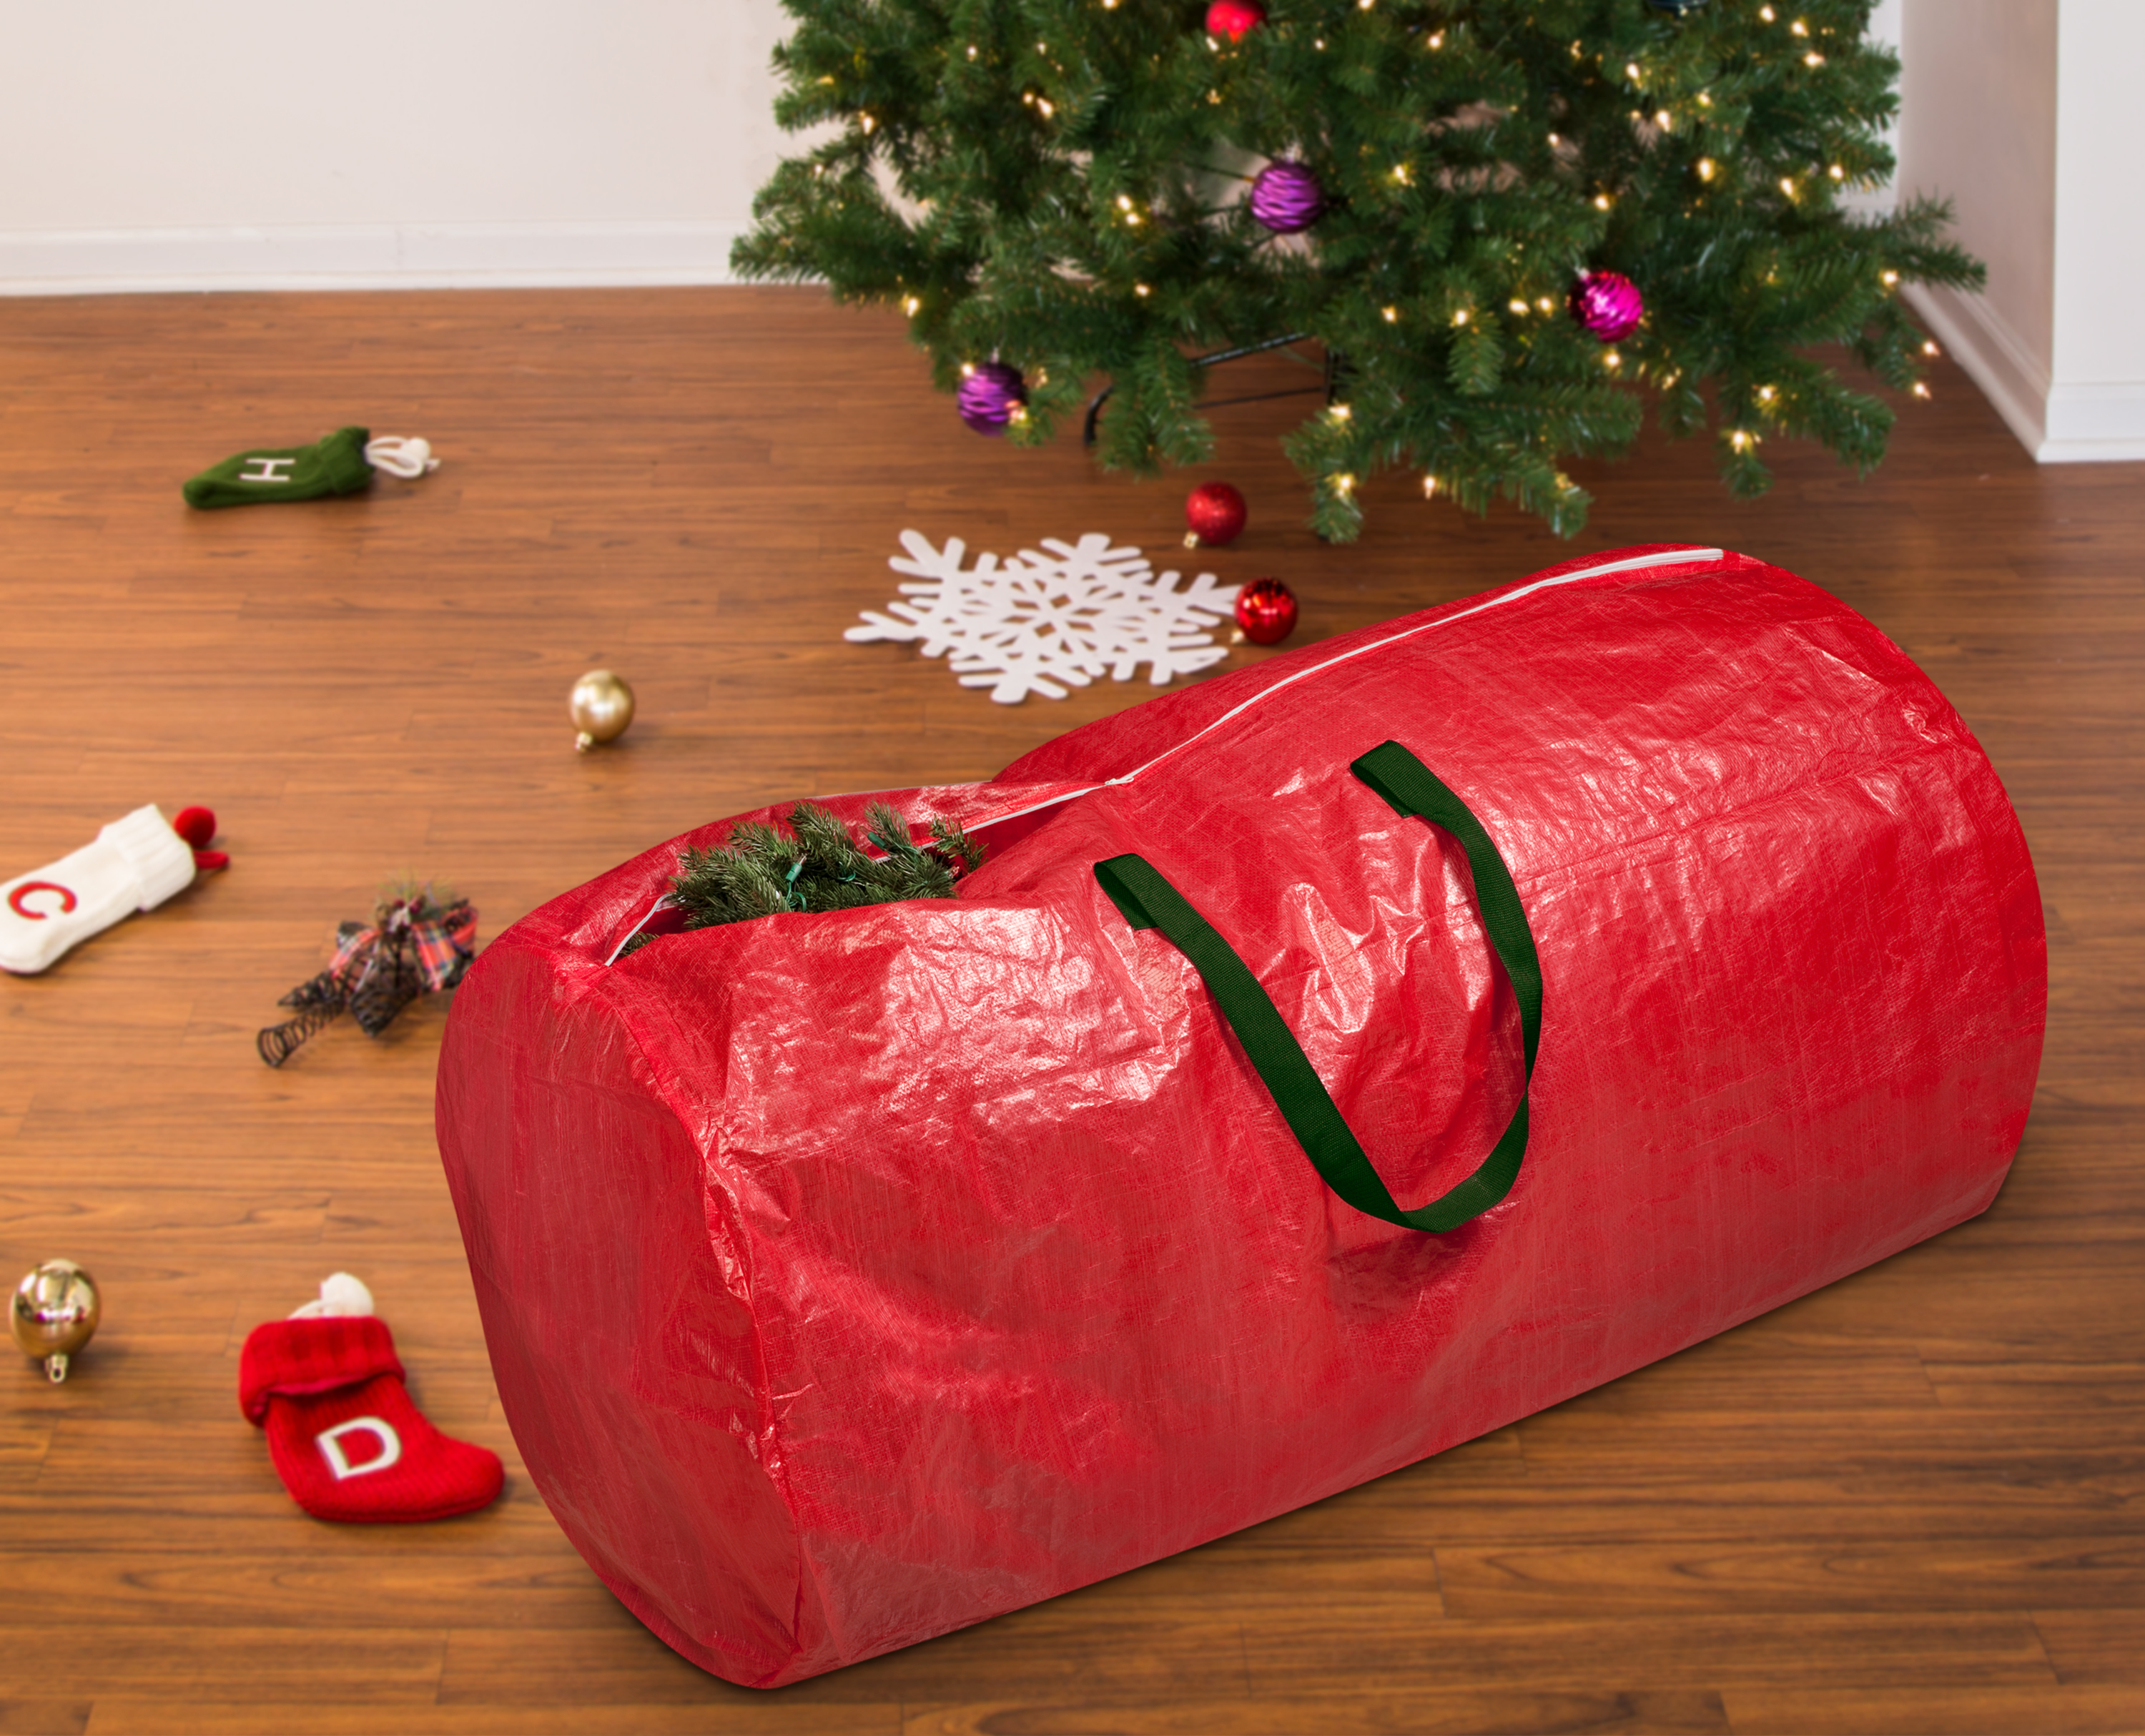 Honey-Can-Do Polyethylene 7' Christmas Tree Storage Bag with Handles, Red - image 1 of 6